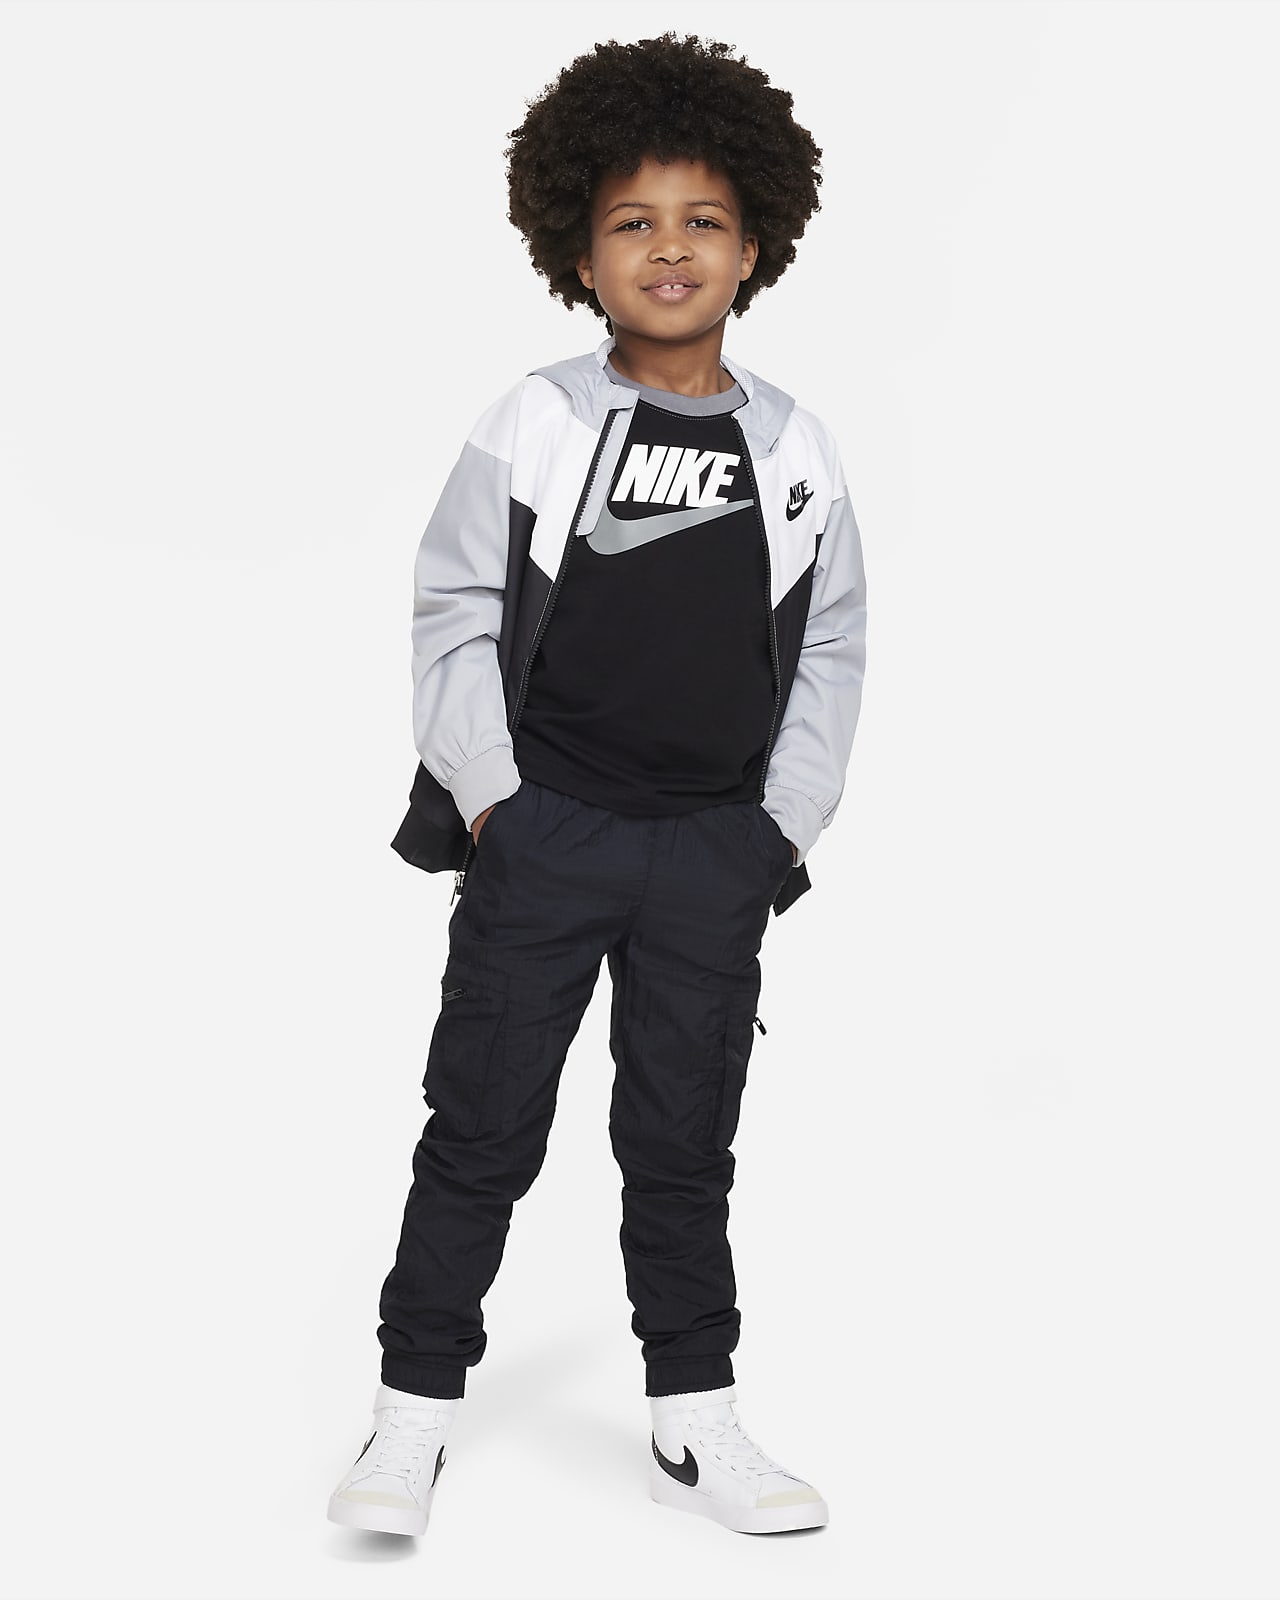 Raglan Sportswear Nike Kids\' T-Shirt. Tee Futura Little